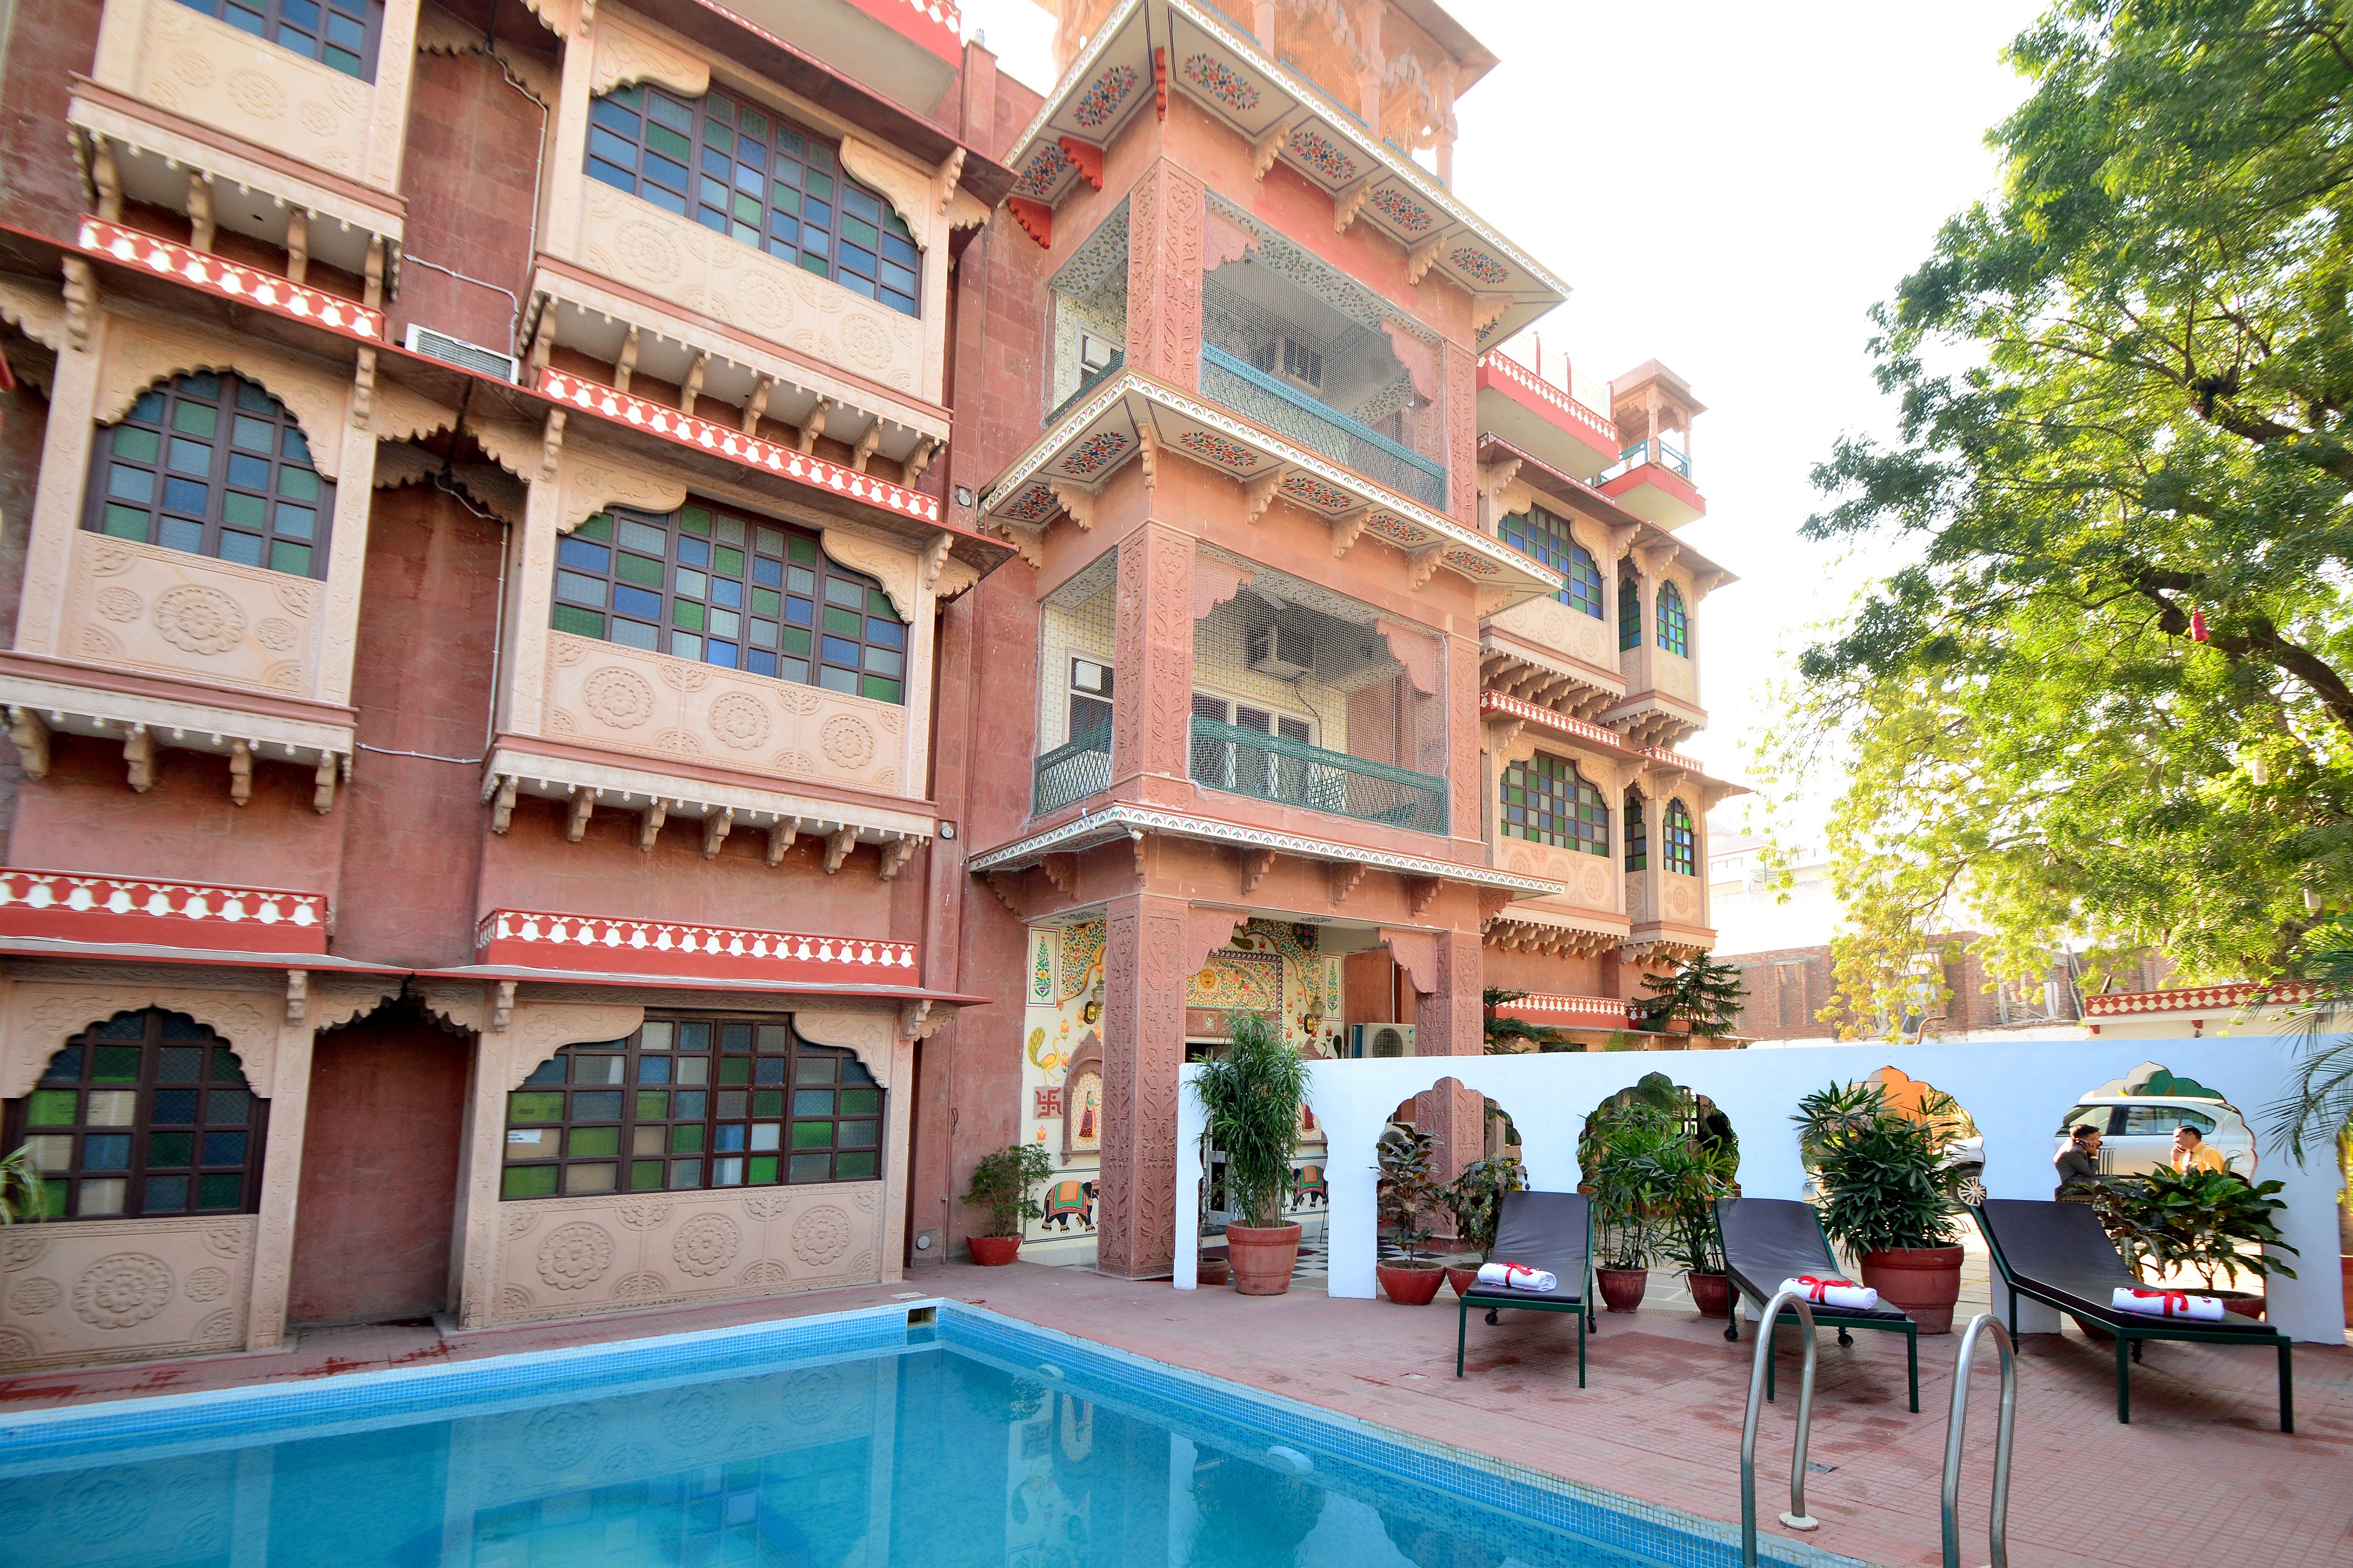 Mahal Khandela- A Heritage Hotel and Spa